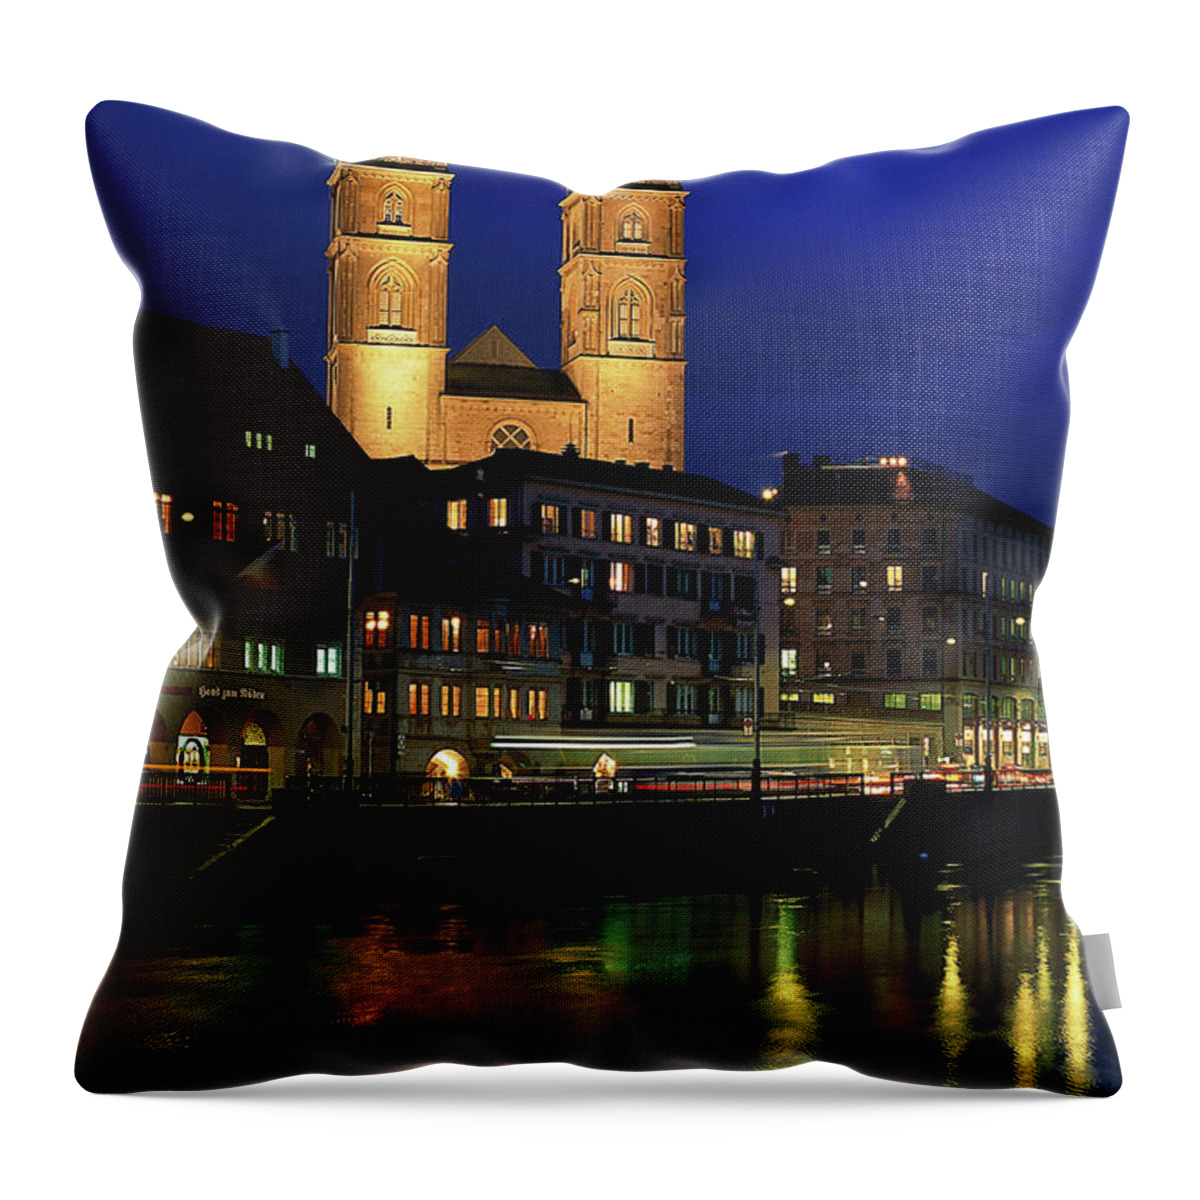 Zurich Throw Pillow featuring the photograph Evening, River Limmat, Zurich by Walter Bibikow